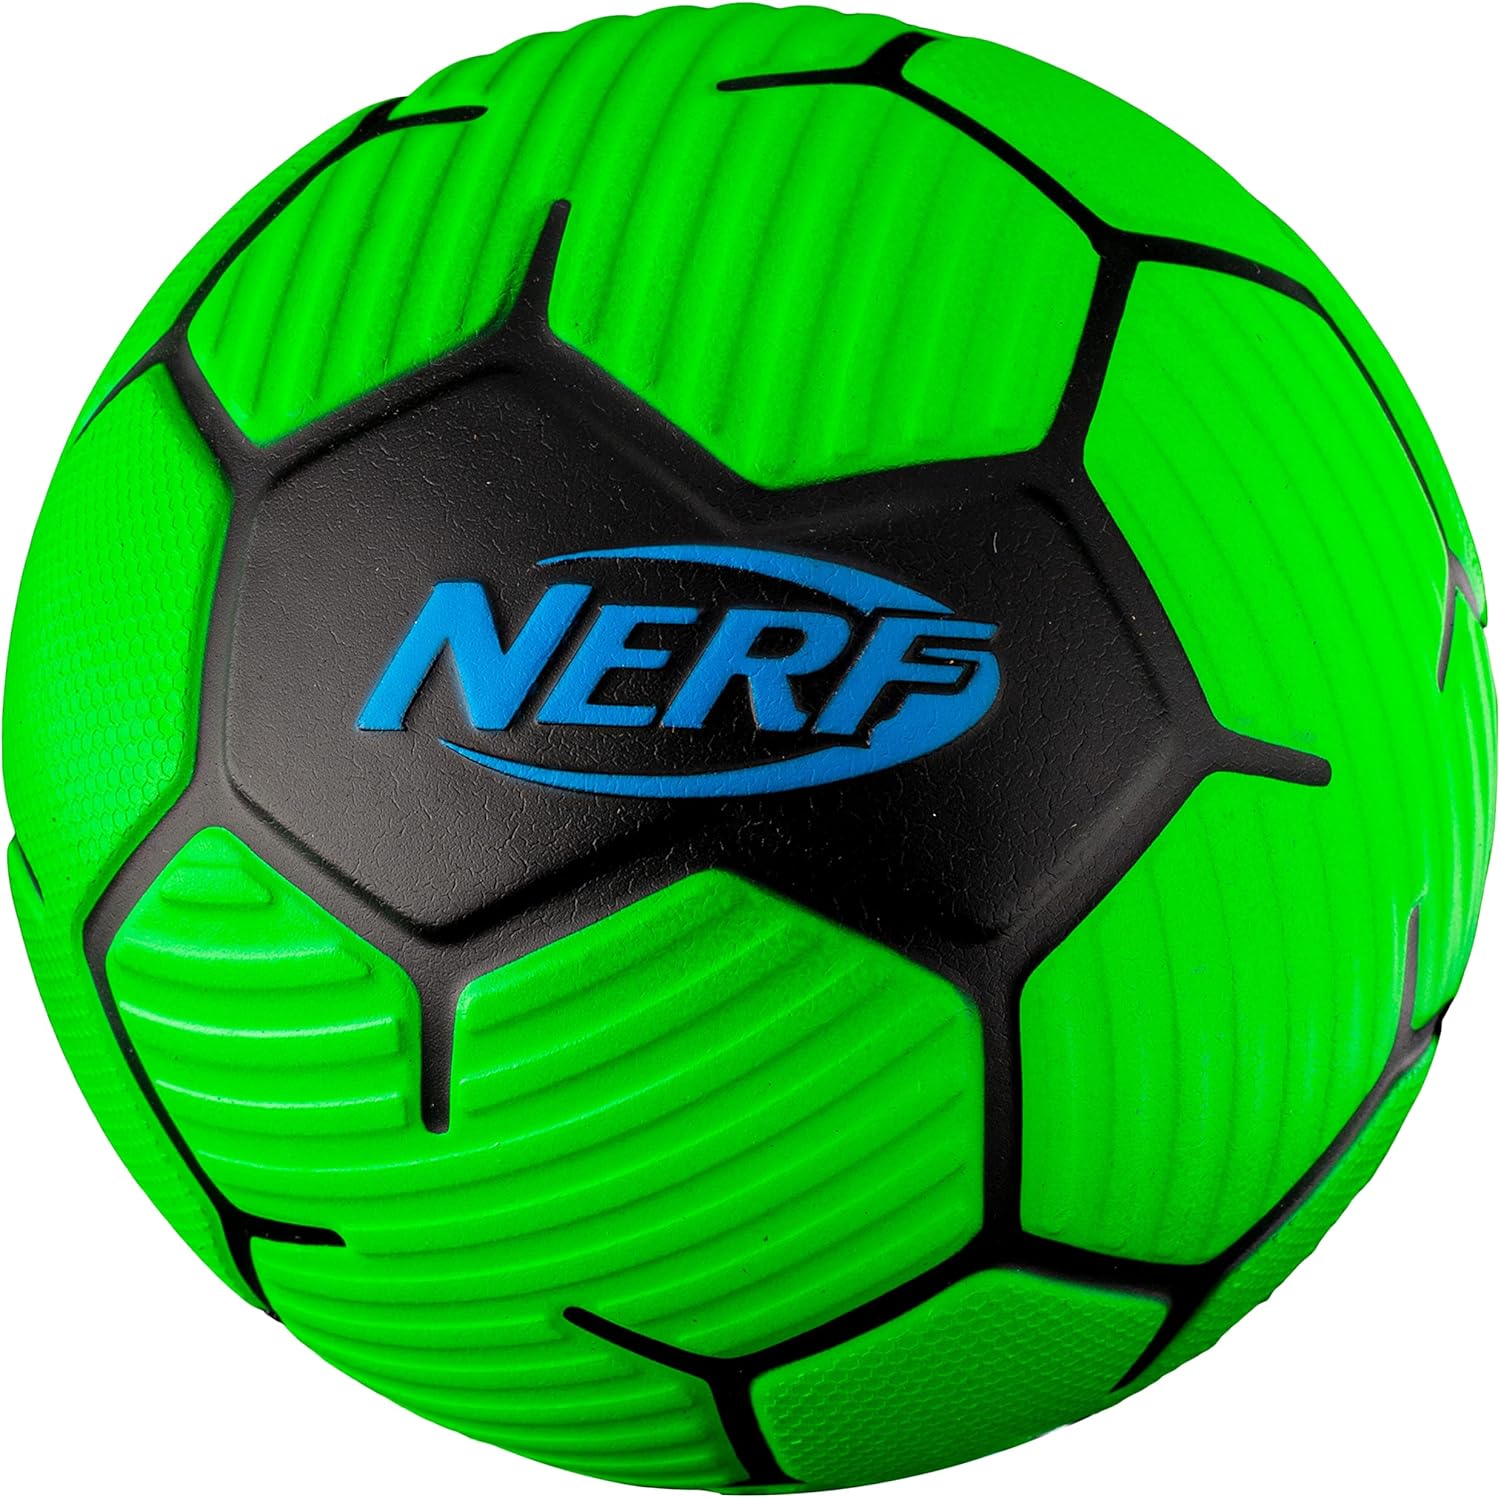 NERF Kids Foam Mini Soccer Ball - Proshot Youth Soft Mini Foam Soccer Ball - 7 Inch Indoor   Outdoor Soccer Ball for Kids - Fun Toy Soccer Ball for Practice   Games